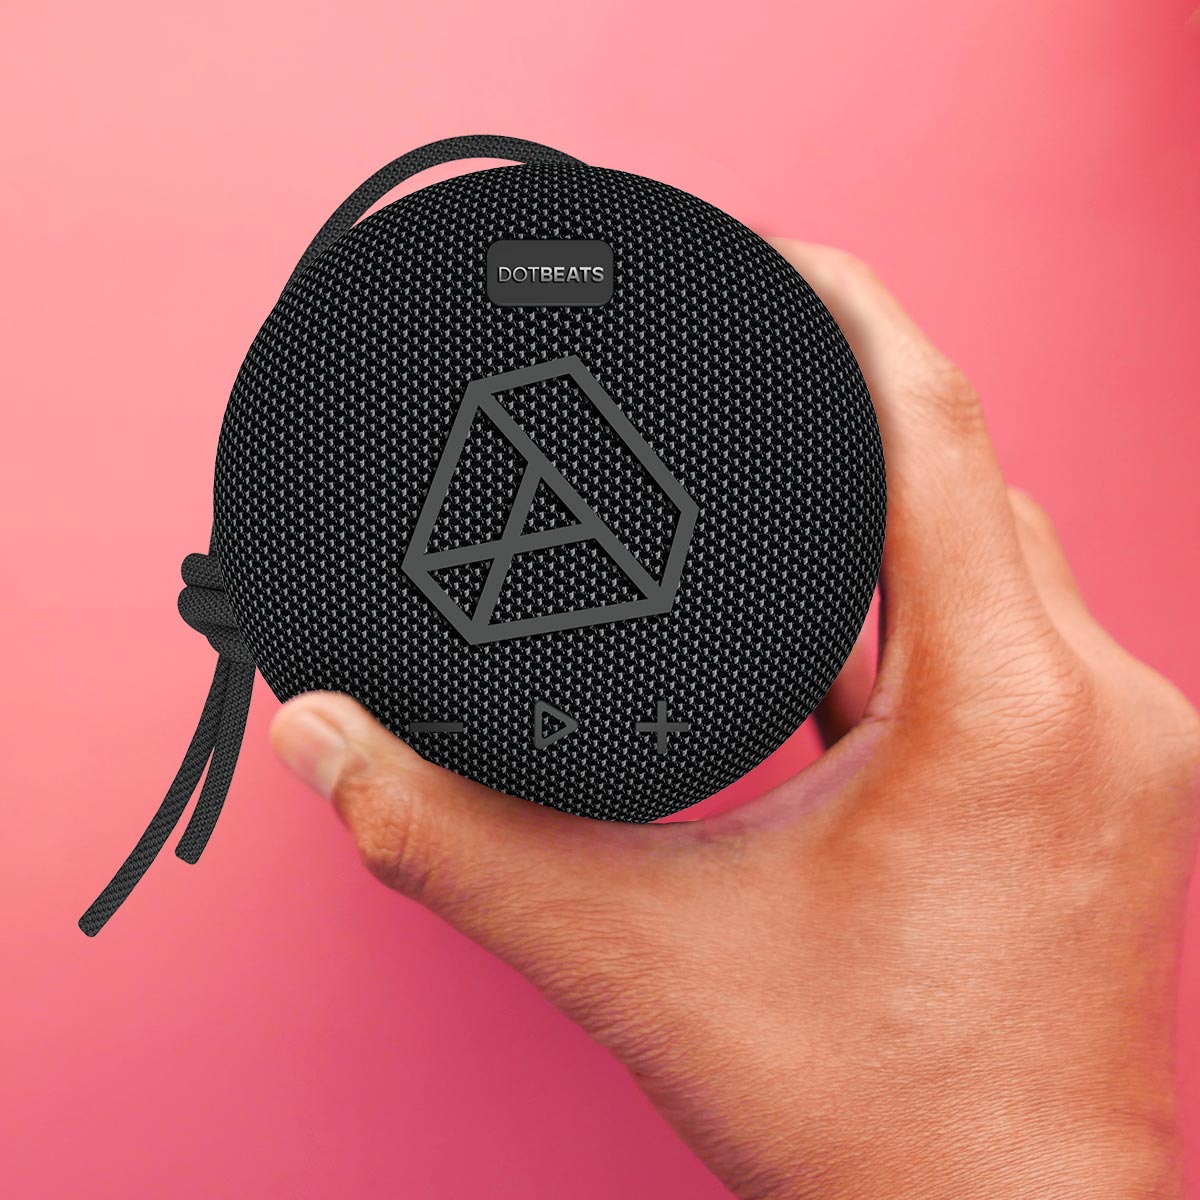 Enjoy Hassle-free Connectivity with the DOTBEATS Bluetooth Wireless Mini Speaker